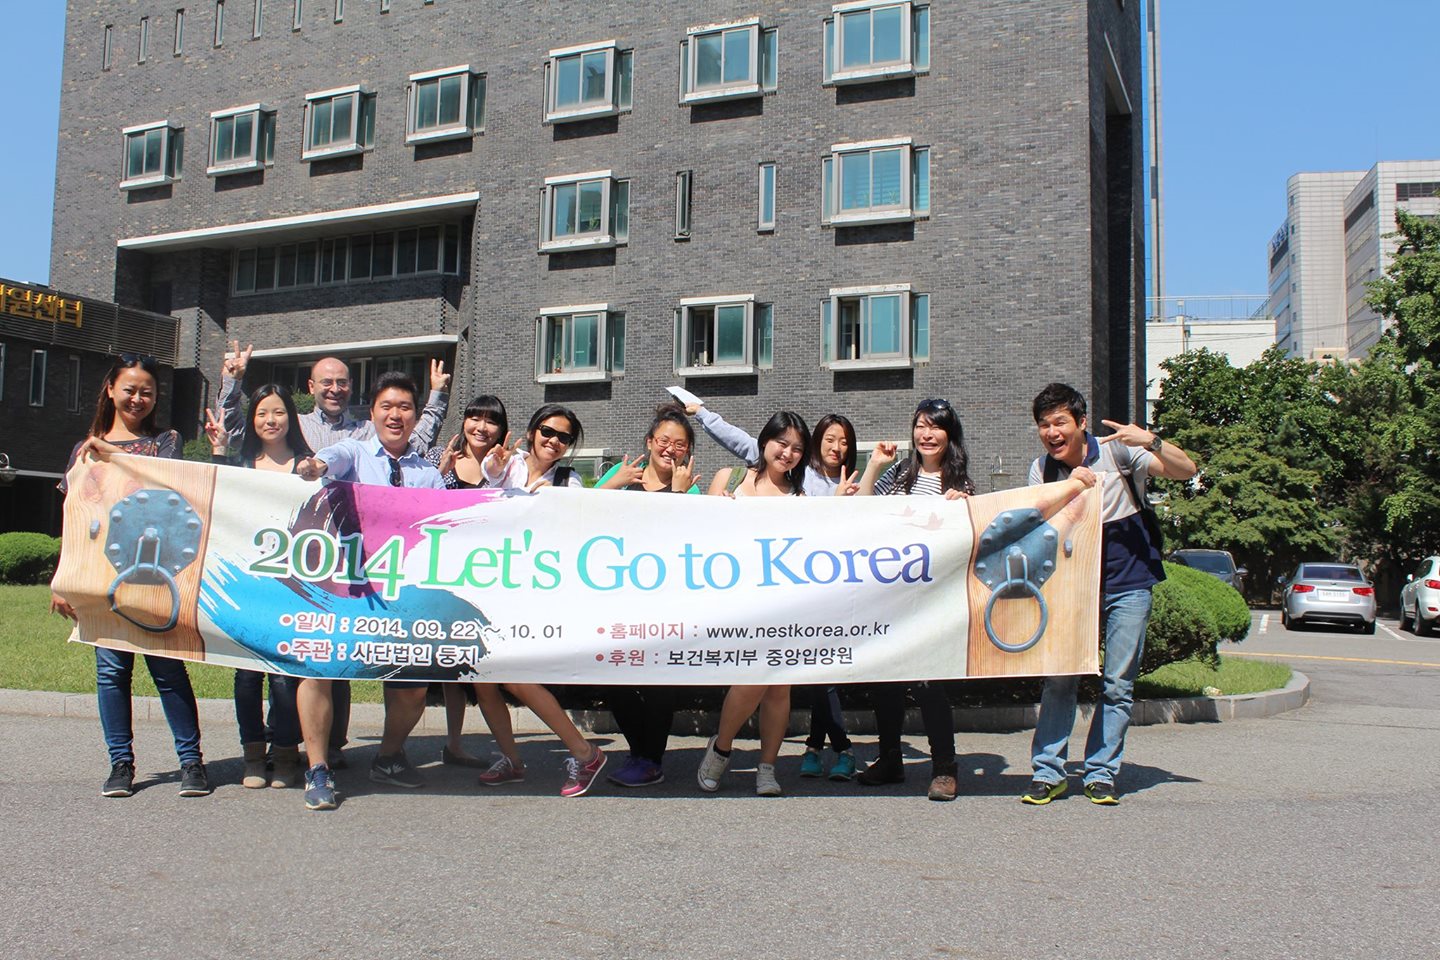 2015 NestKorea “Let’s Go to Korea!”